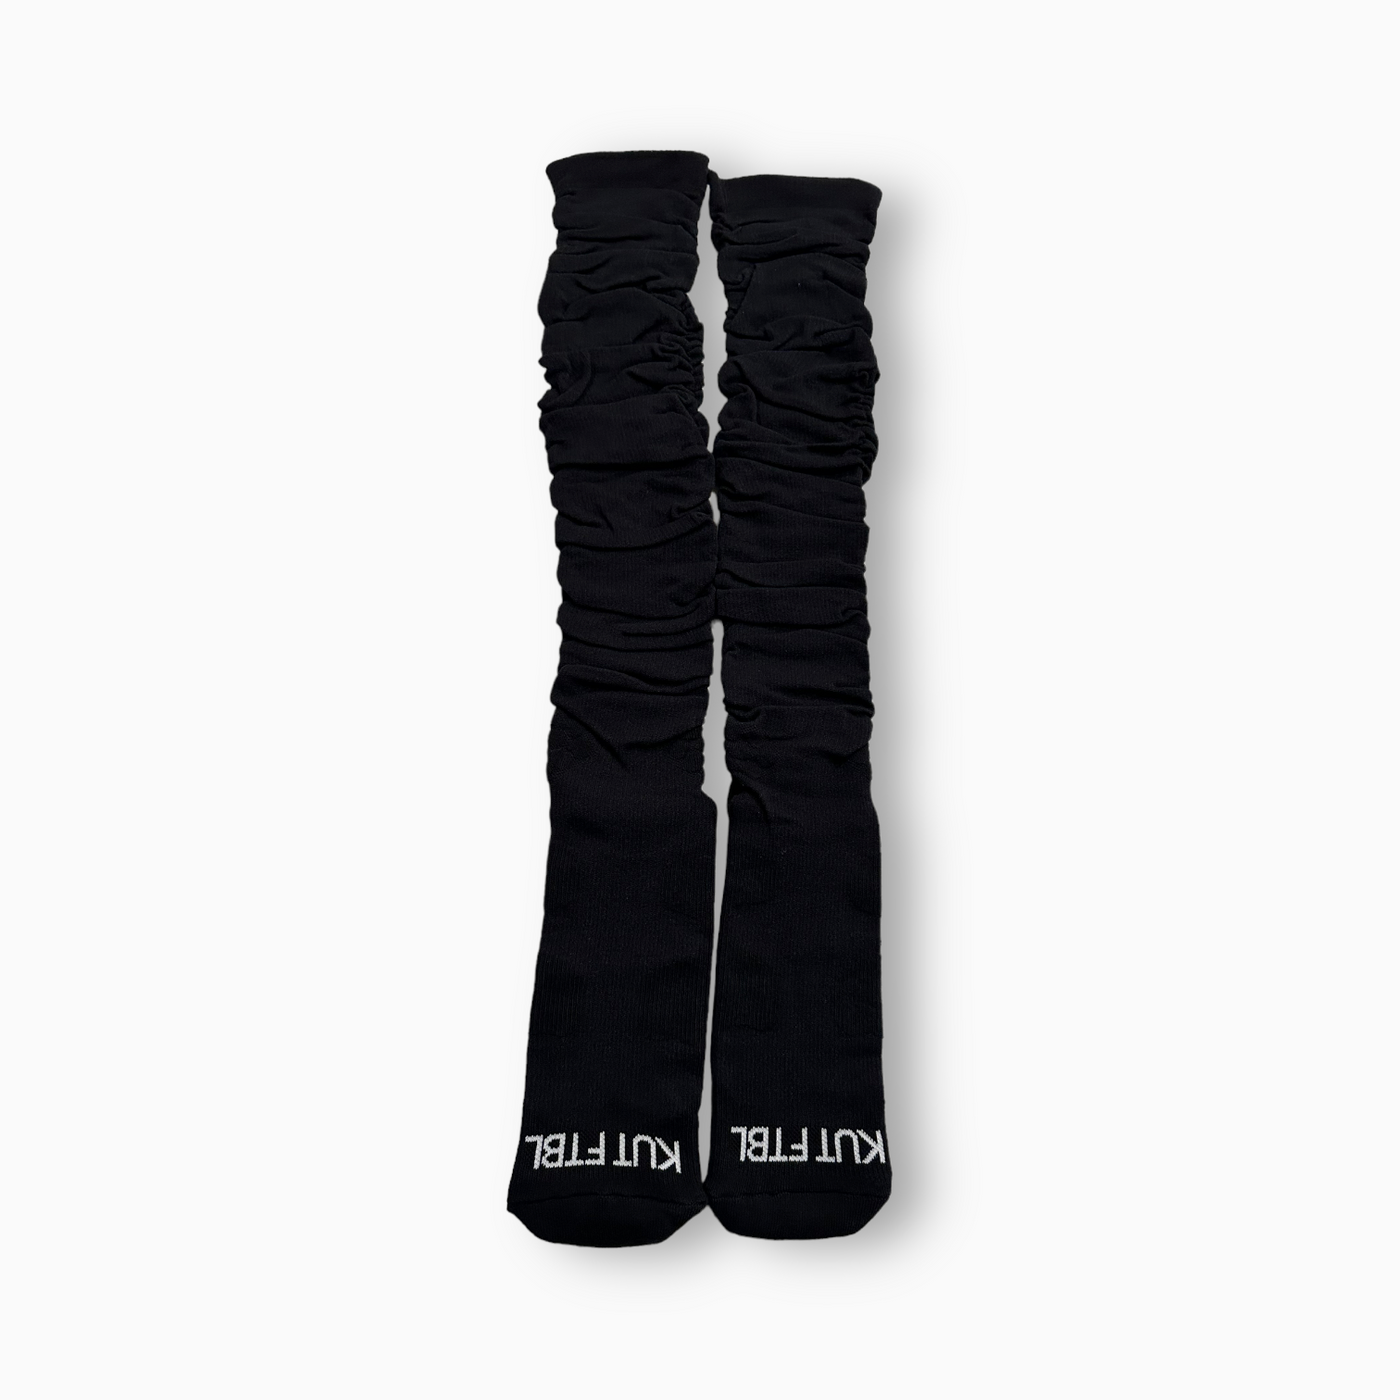 KUTFTBL™ Pre-Scrunched Socks